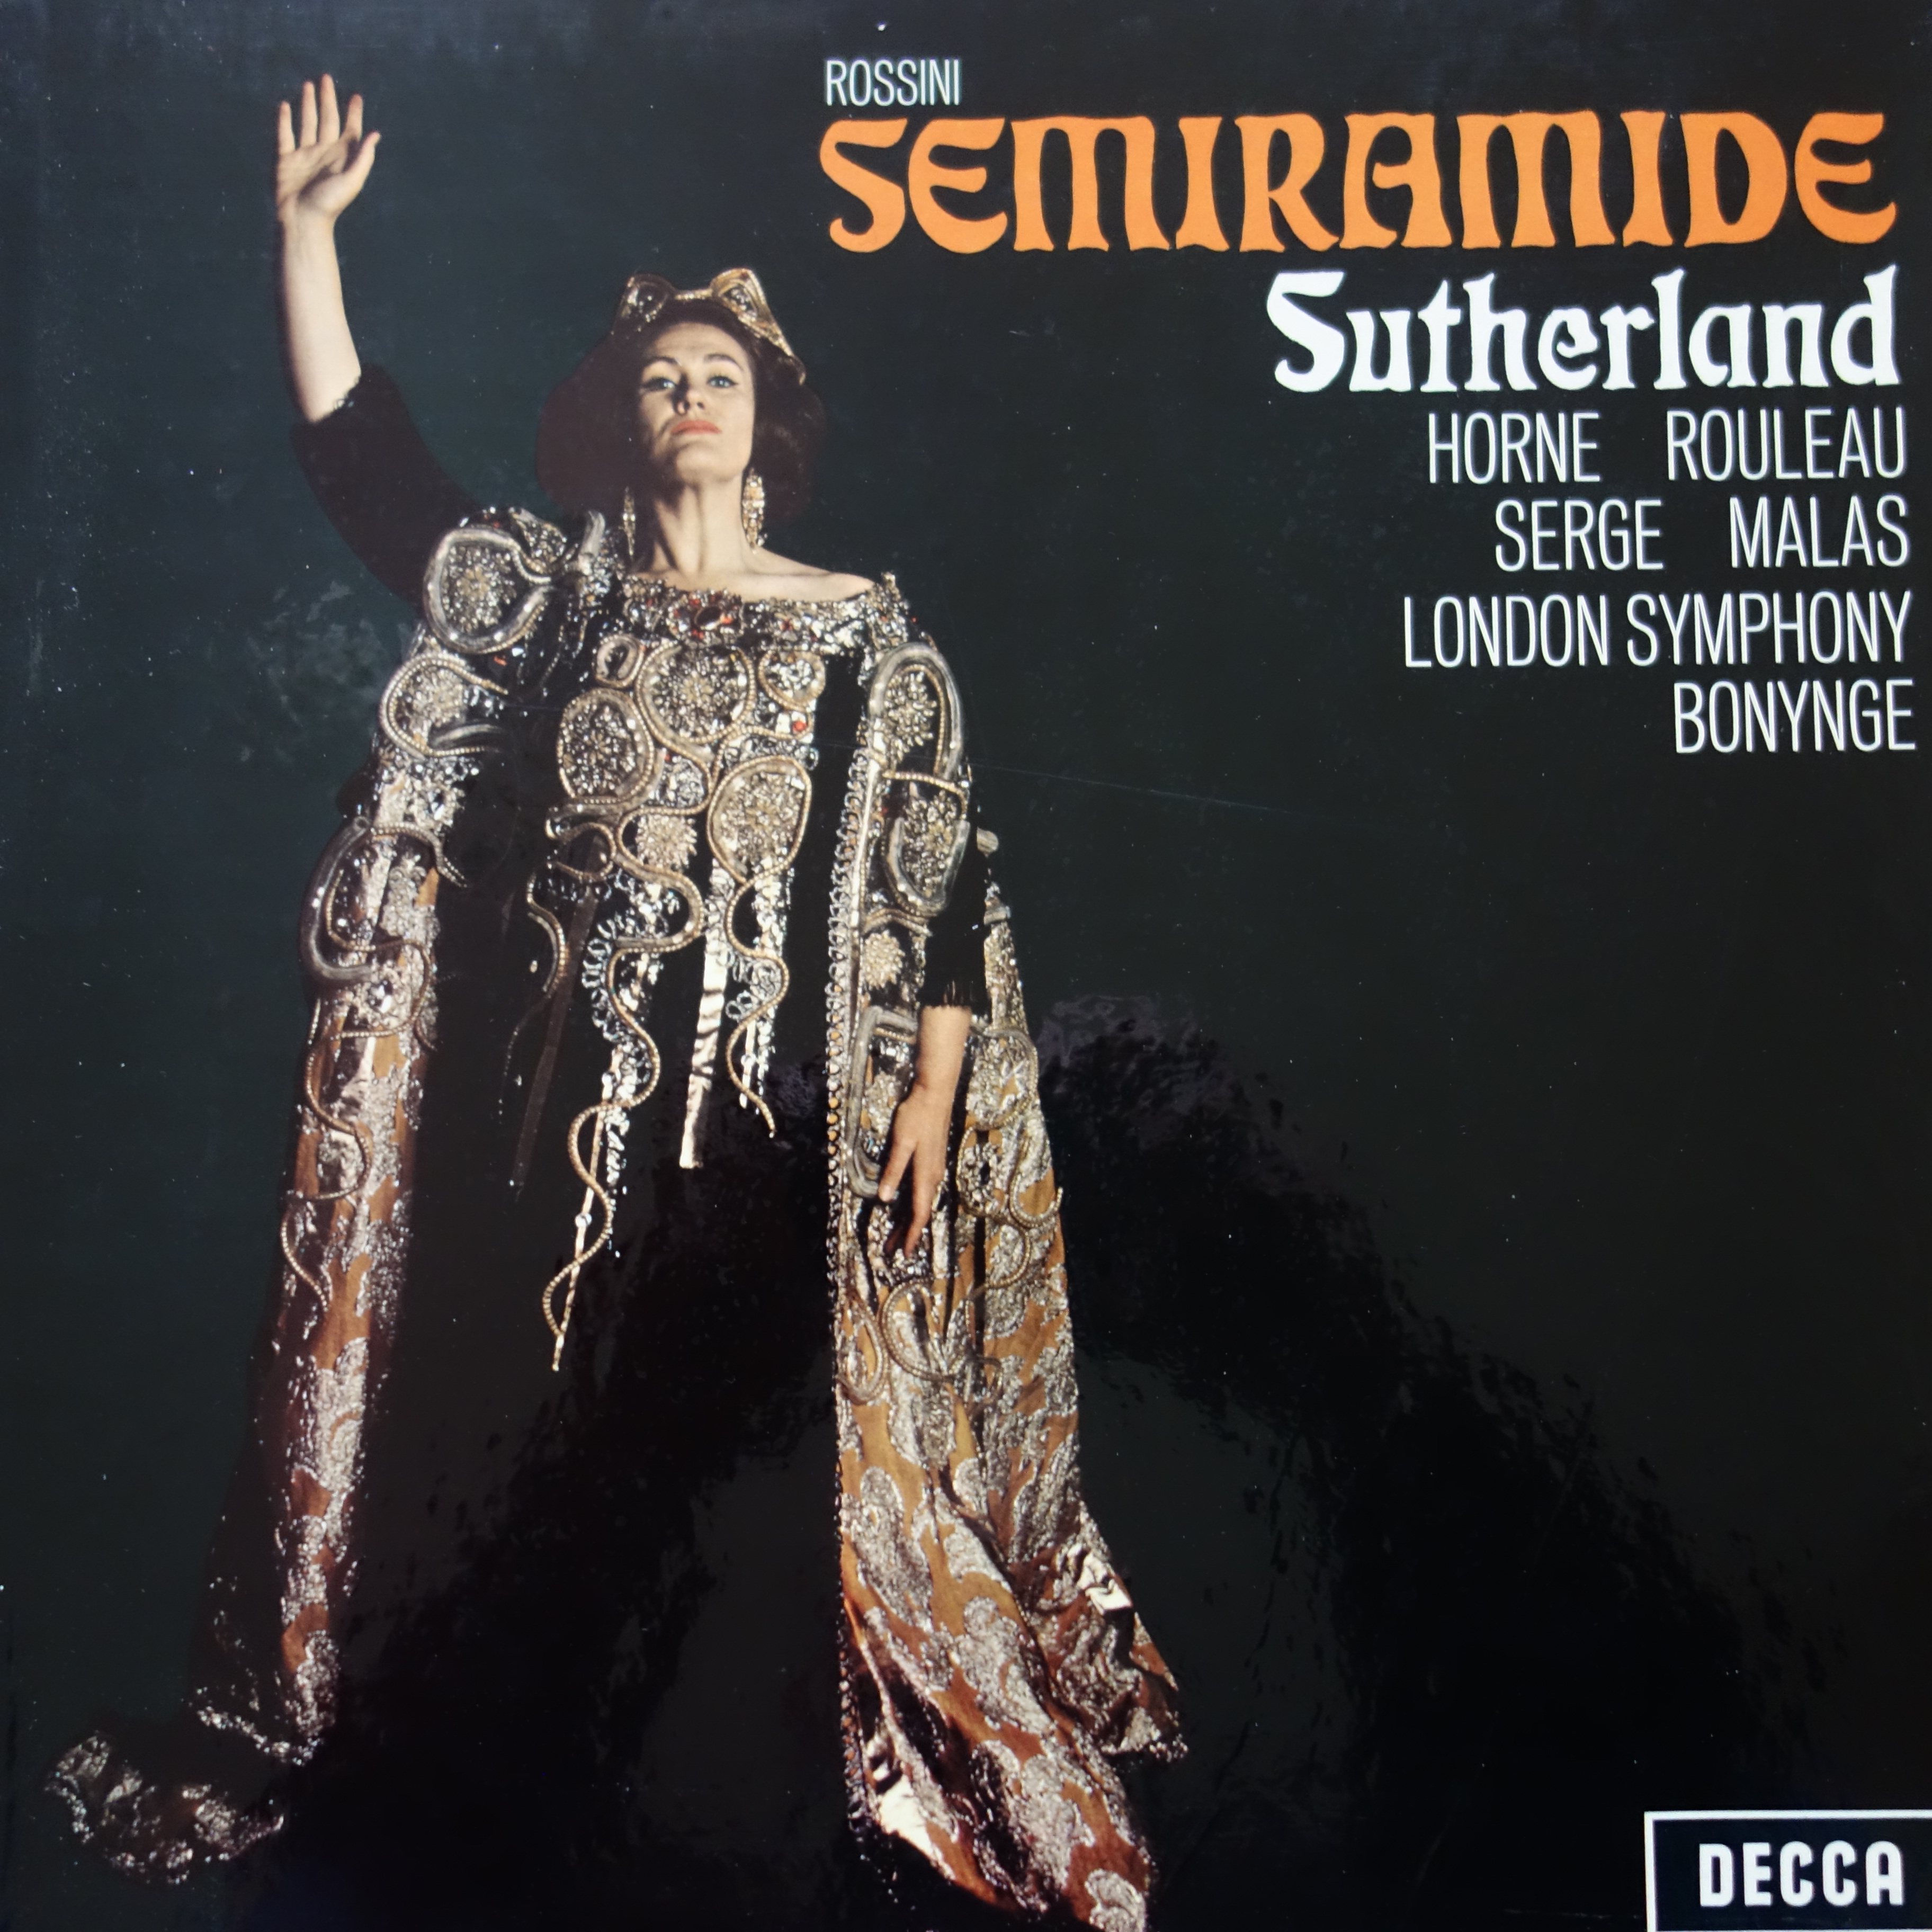 SET 317-9 Rossini Semiramide / Sutherland / Bonynge etc. W/B 3 LP box